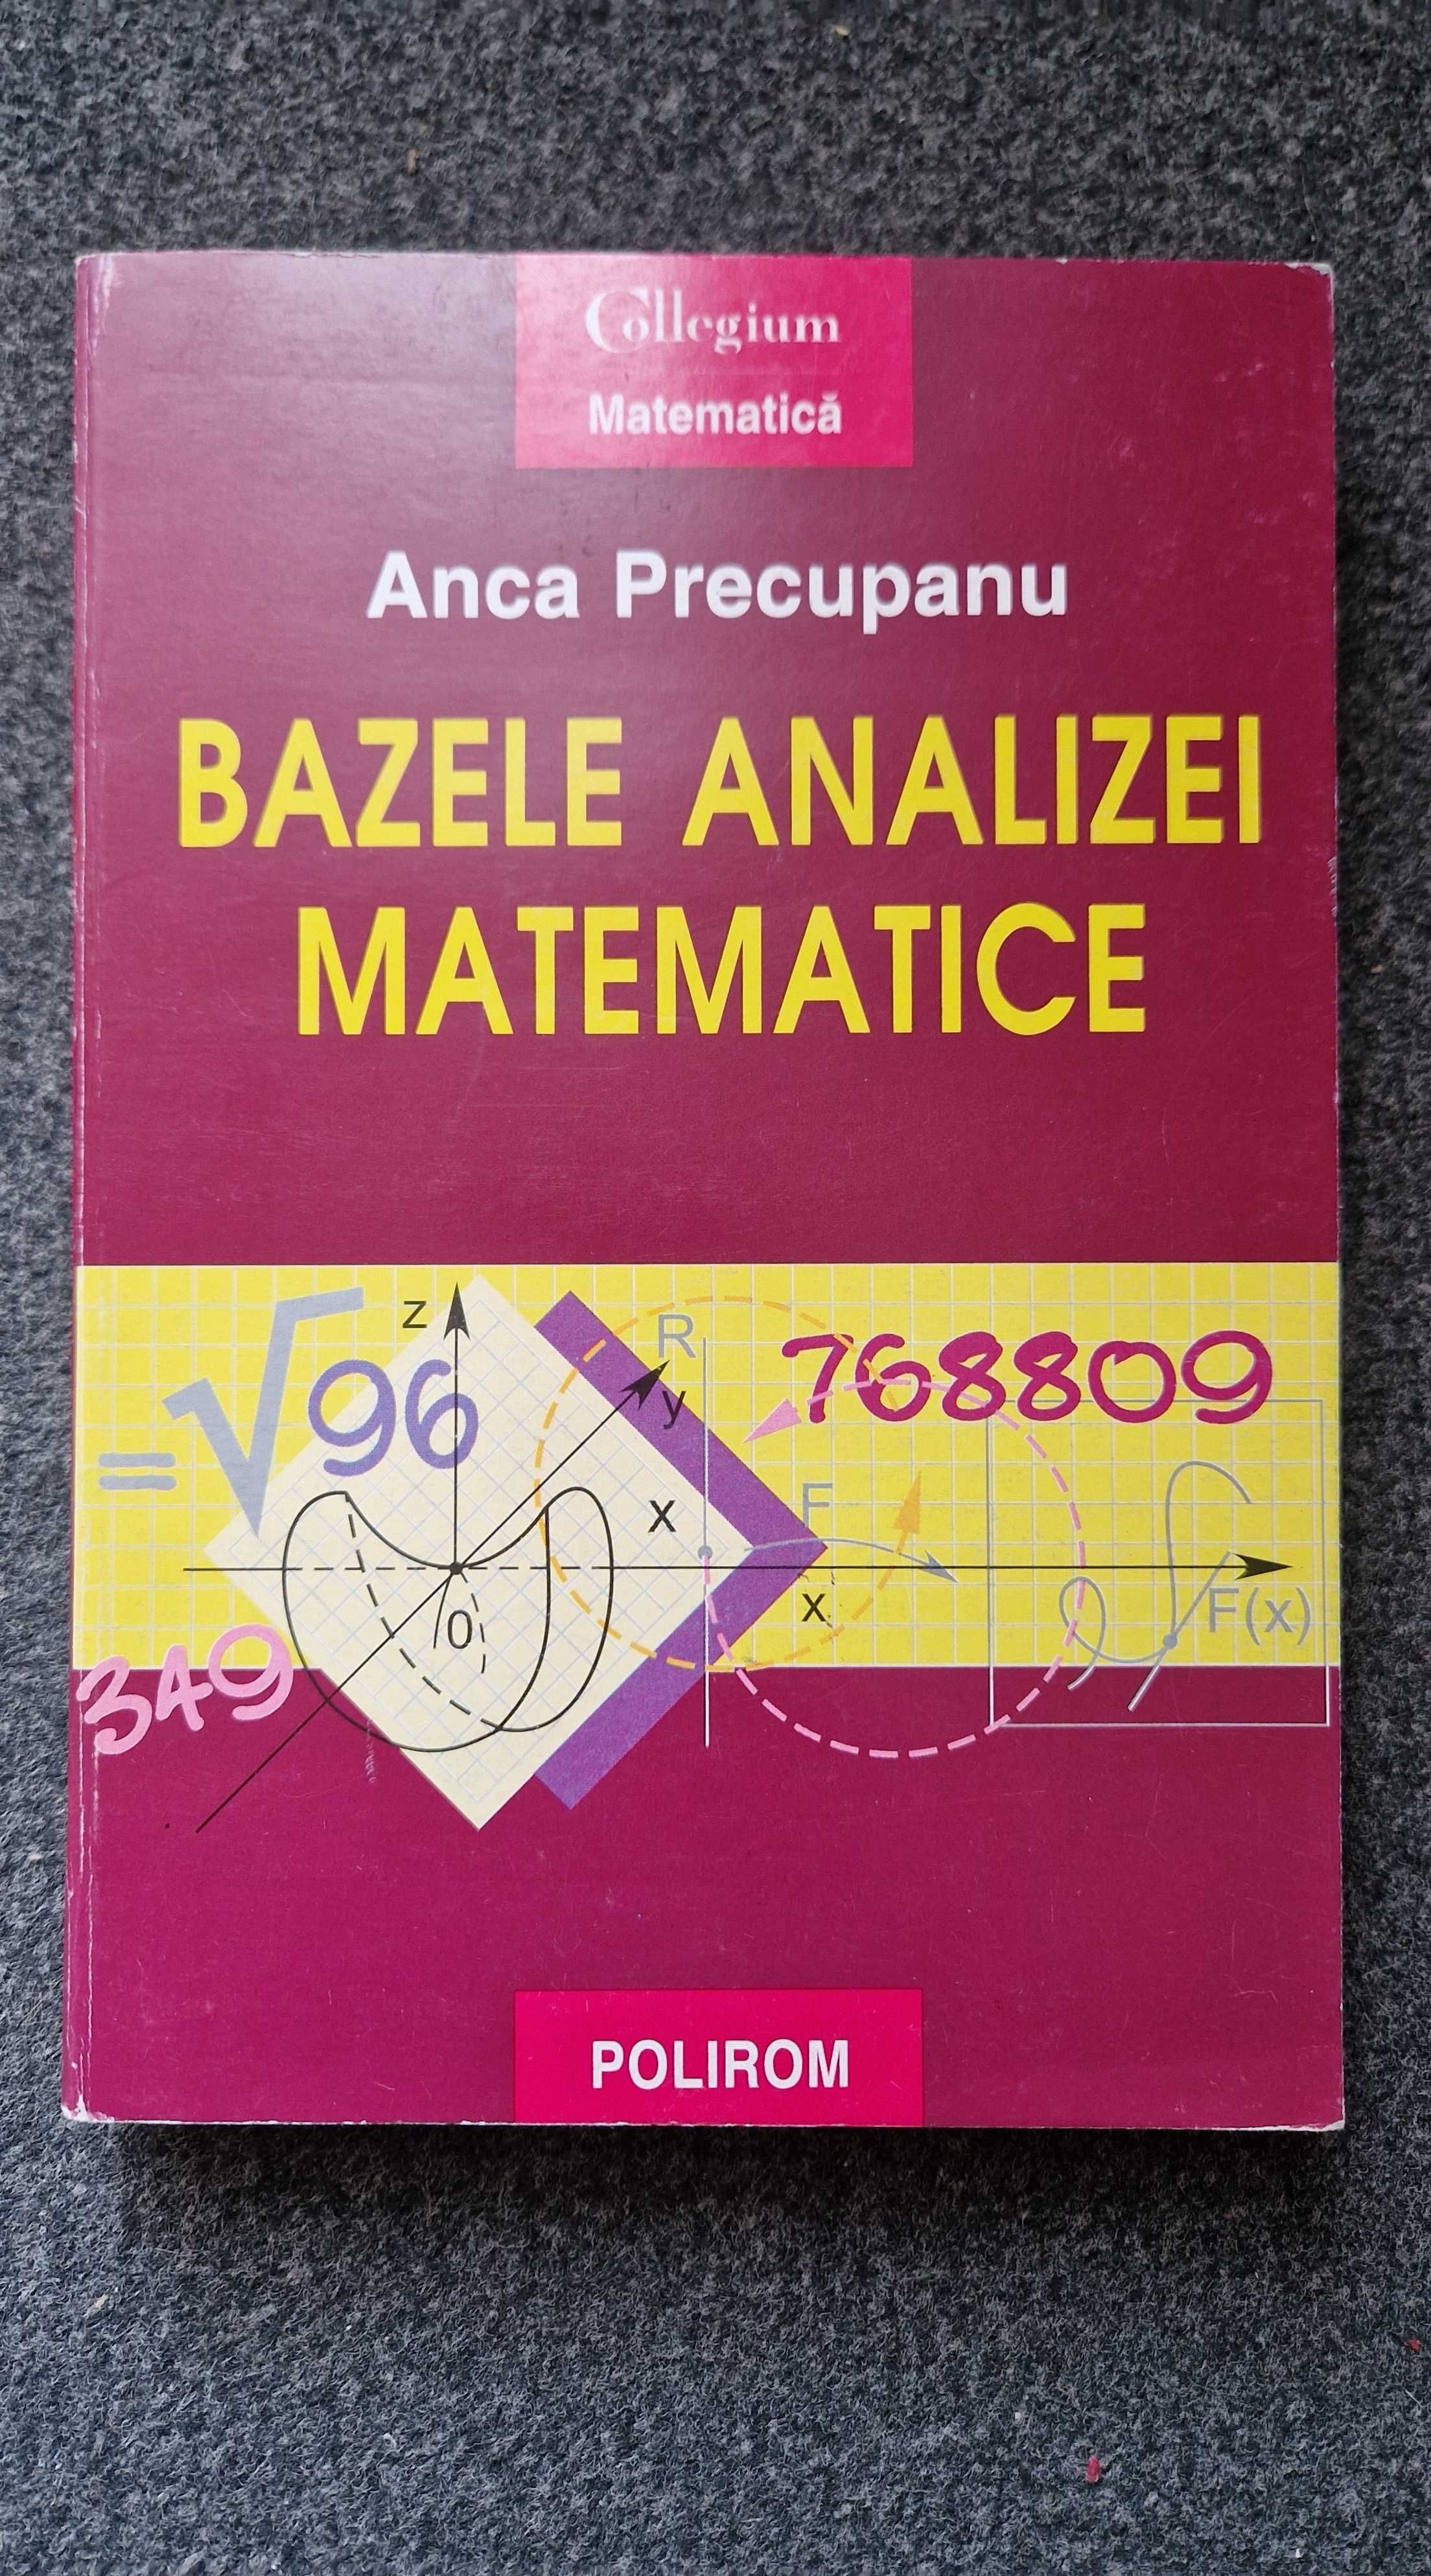 BAZELE ANALIZEI MATEMATICE - Anca Precupanu (ed. 1998)